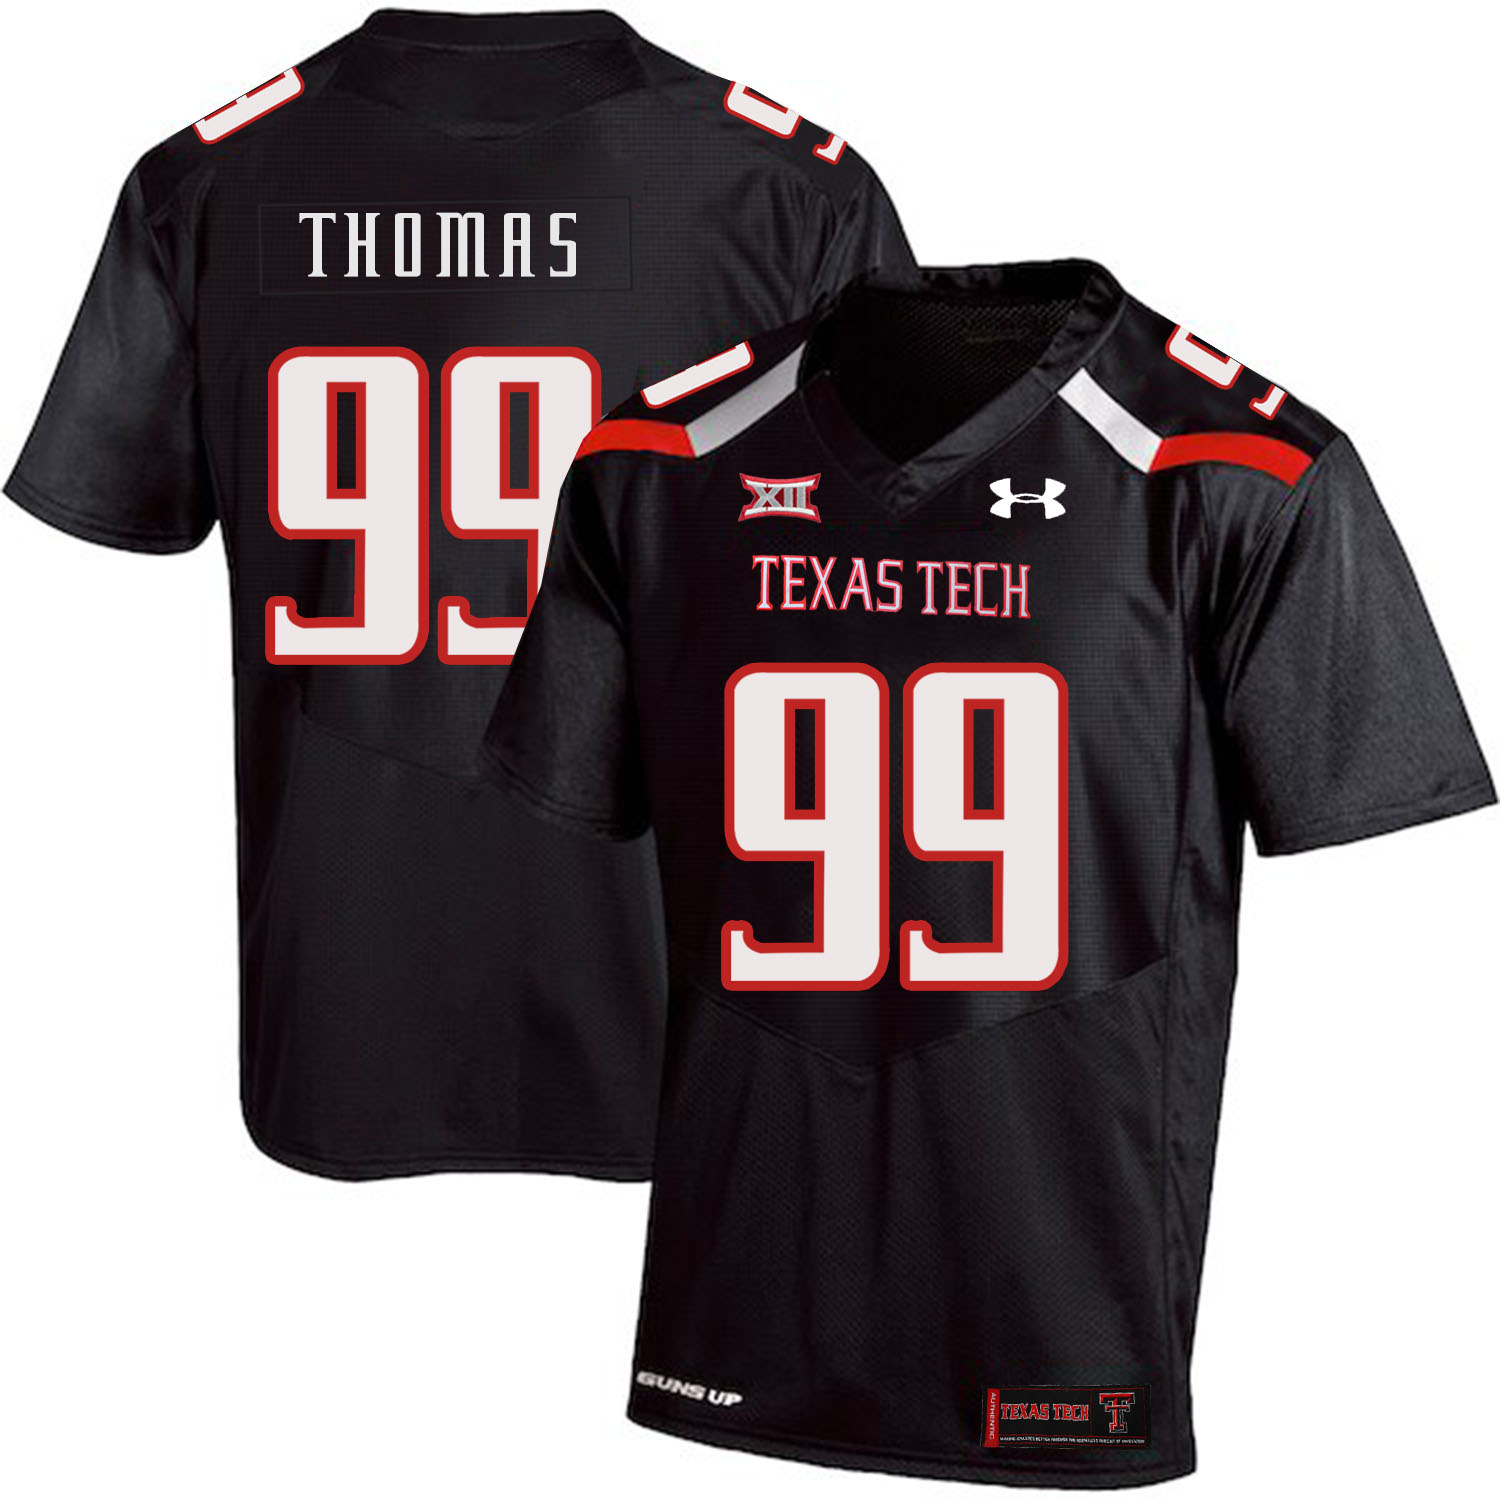 Texas Tech Red Raiders 99 Mychealon Thomas Black College Football Jersey